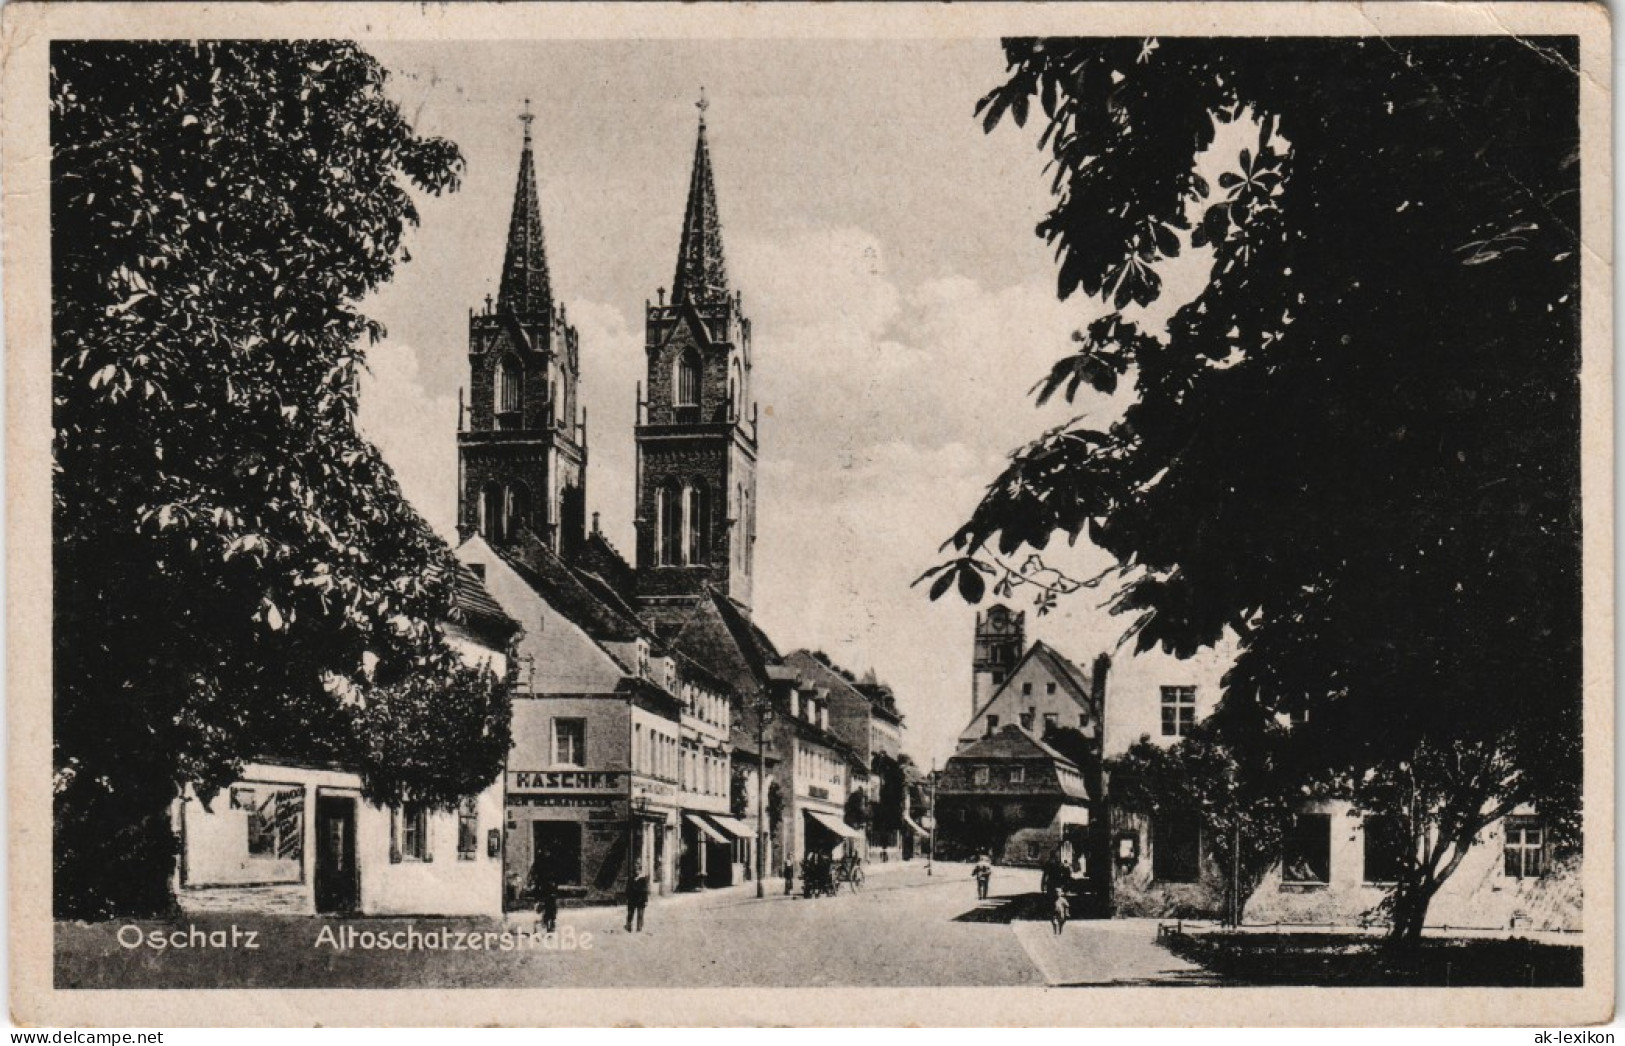 Ansichtskarte Oschatz Altoschatzerstraße 1945 - Oschatz